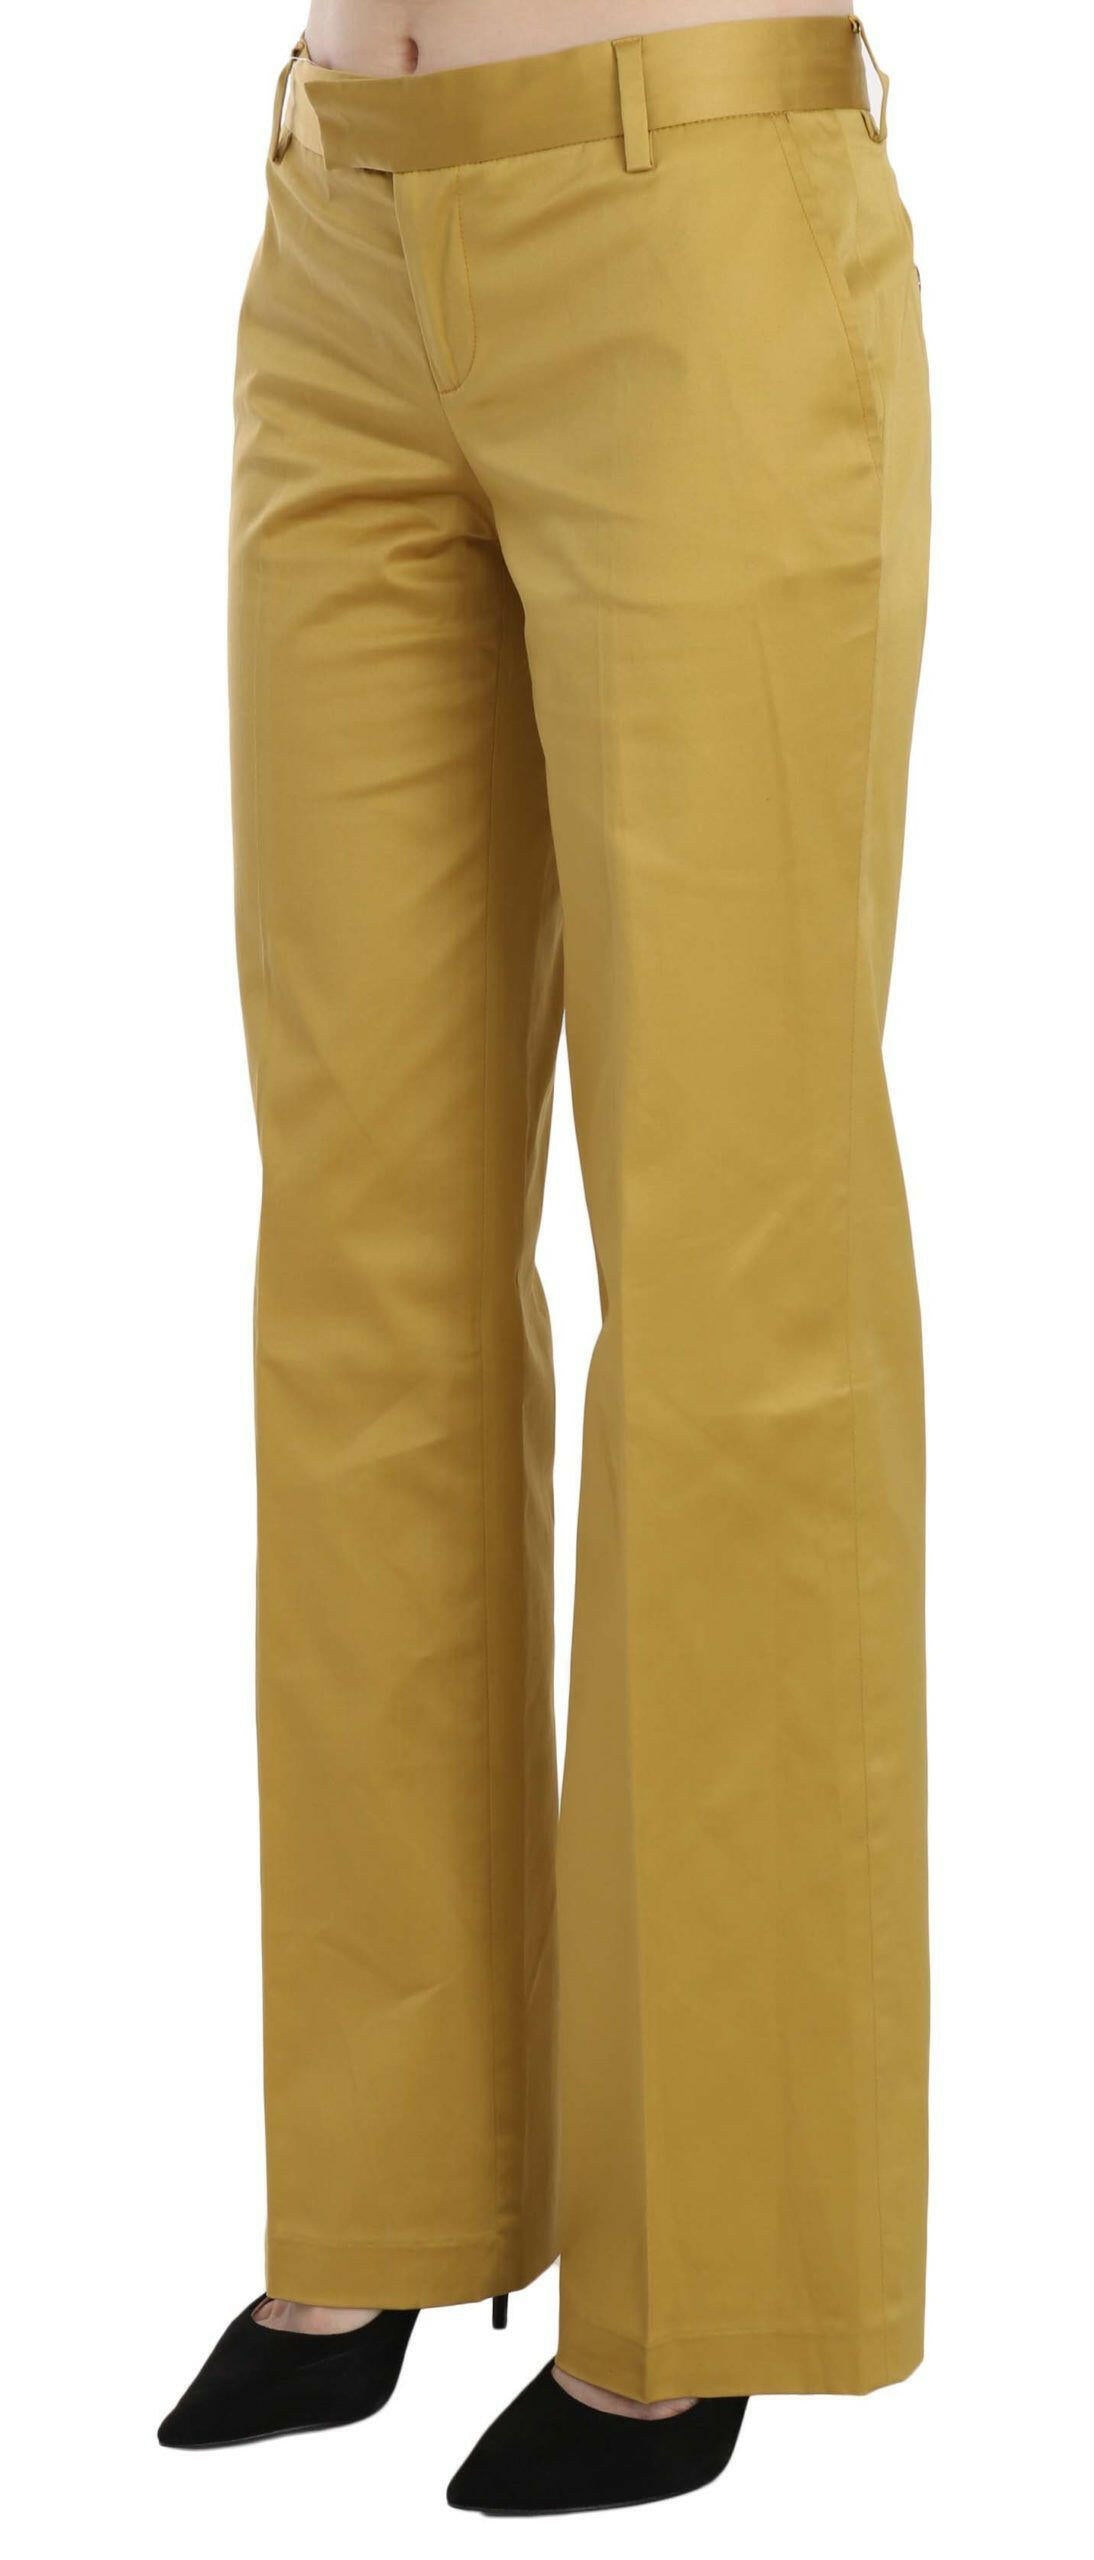 Just Cavalli Mustard Yellow Straight Formal Trousers Pants - GENUINE AUTHENTIC BRAND LLC  